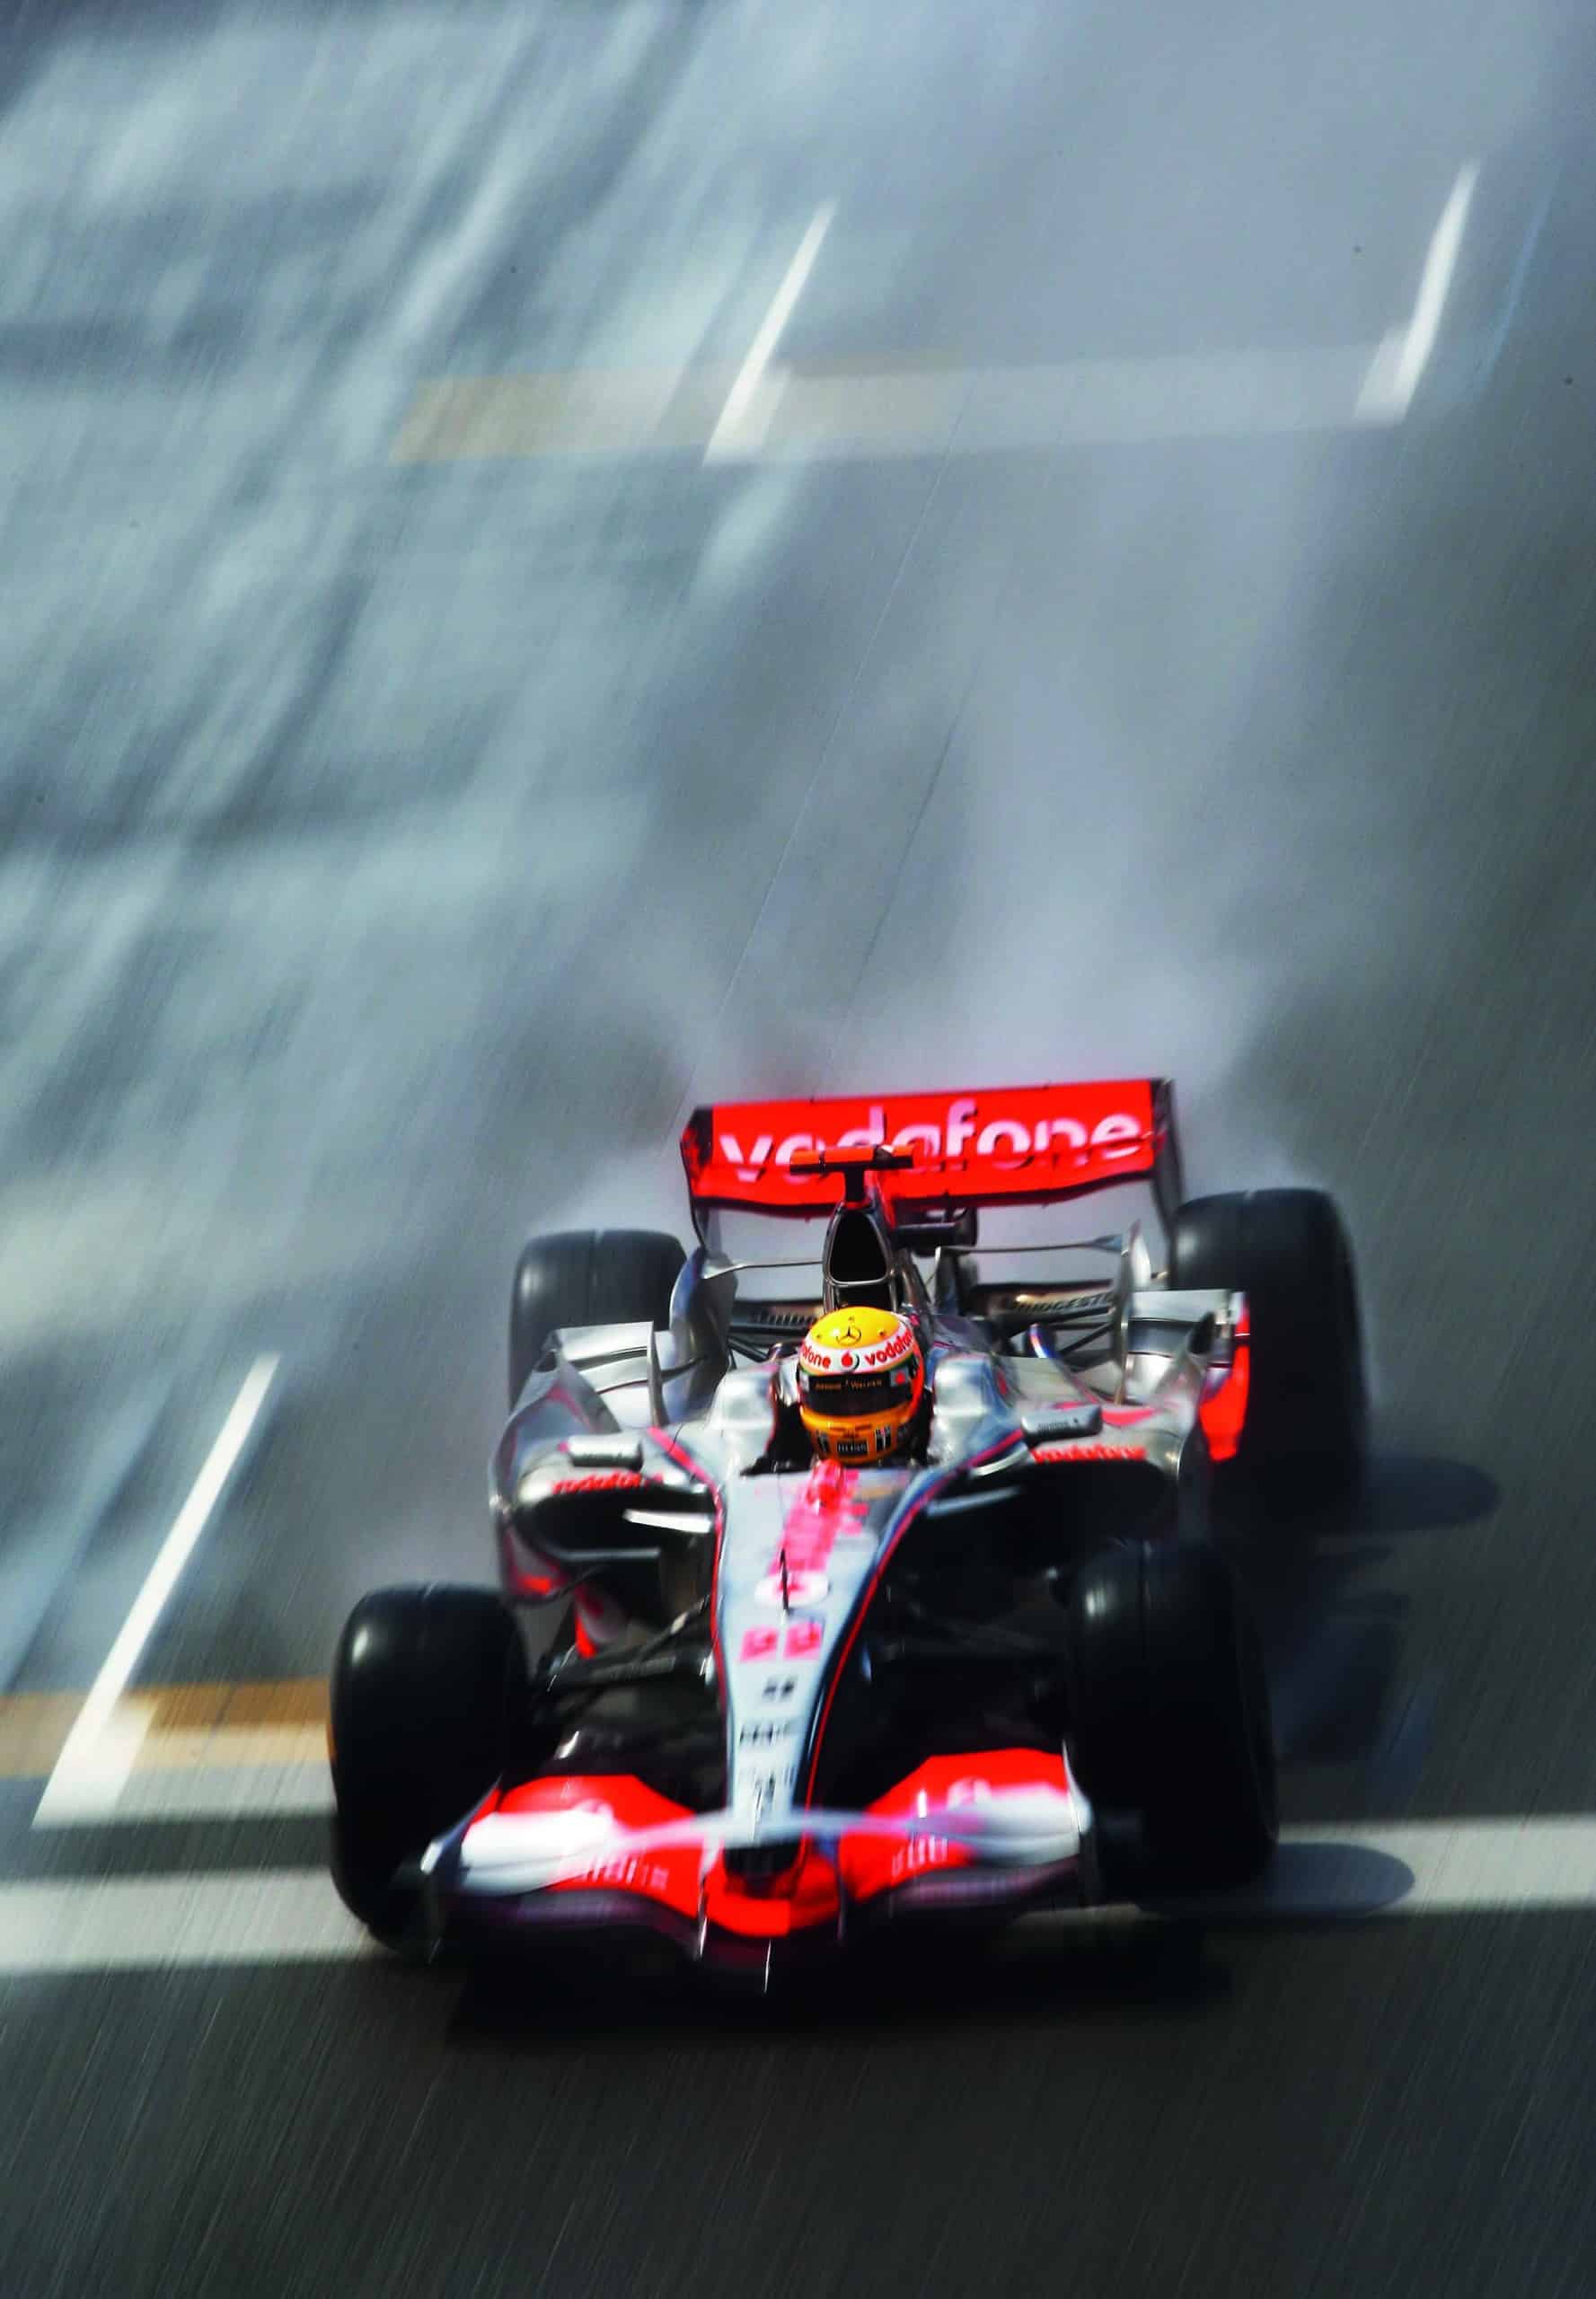 Lewis-Hamilton-crosses-line-to-win-the-2008-British-Grand-Prix